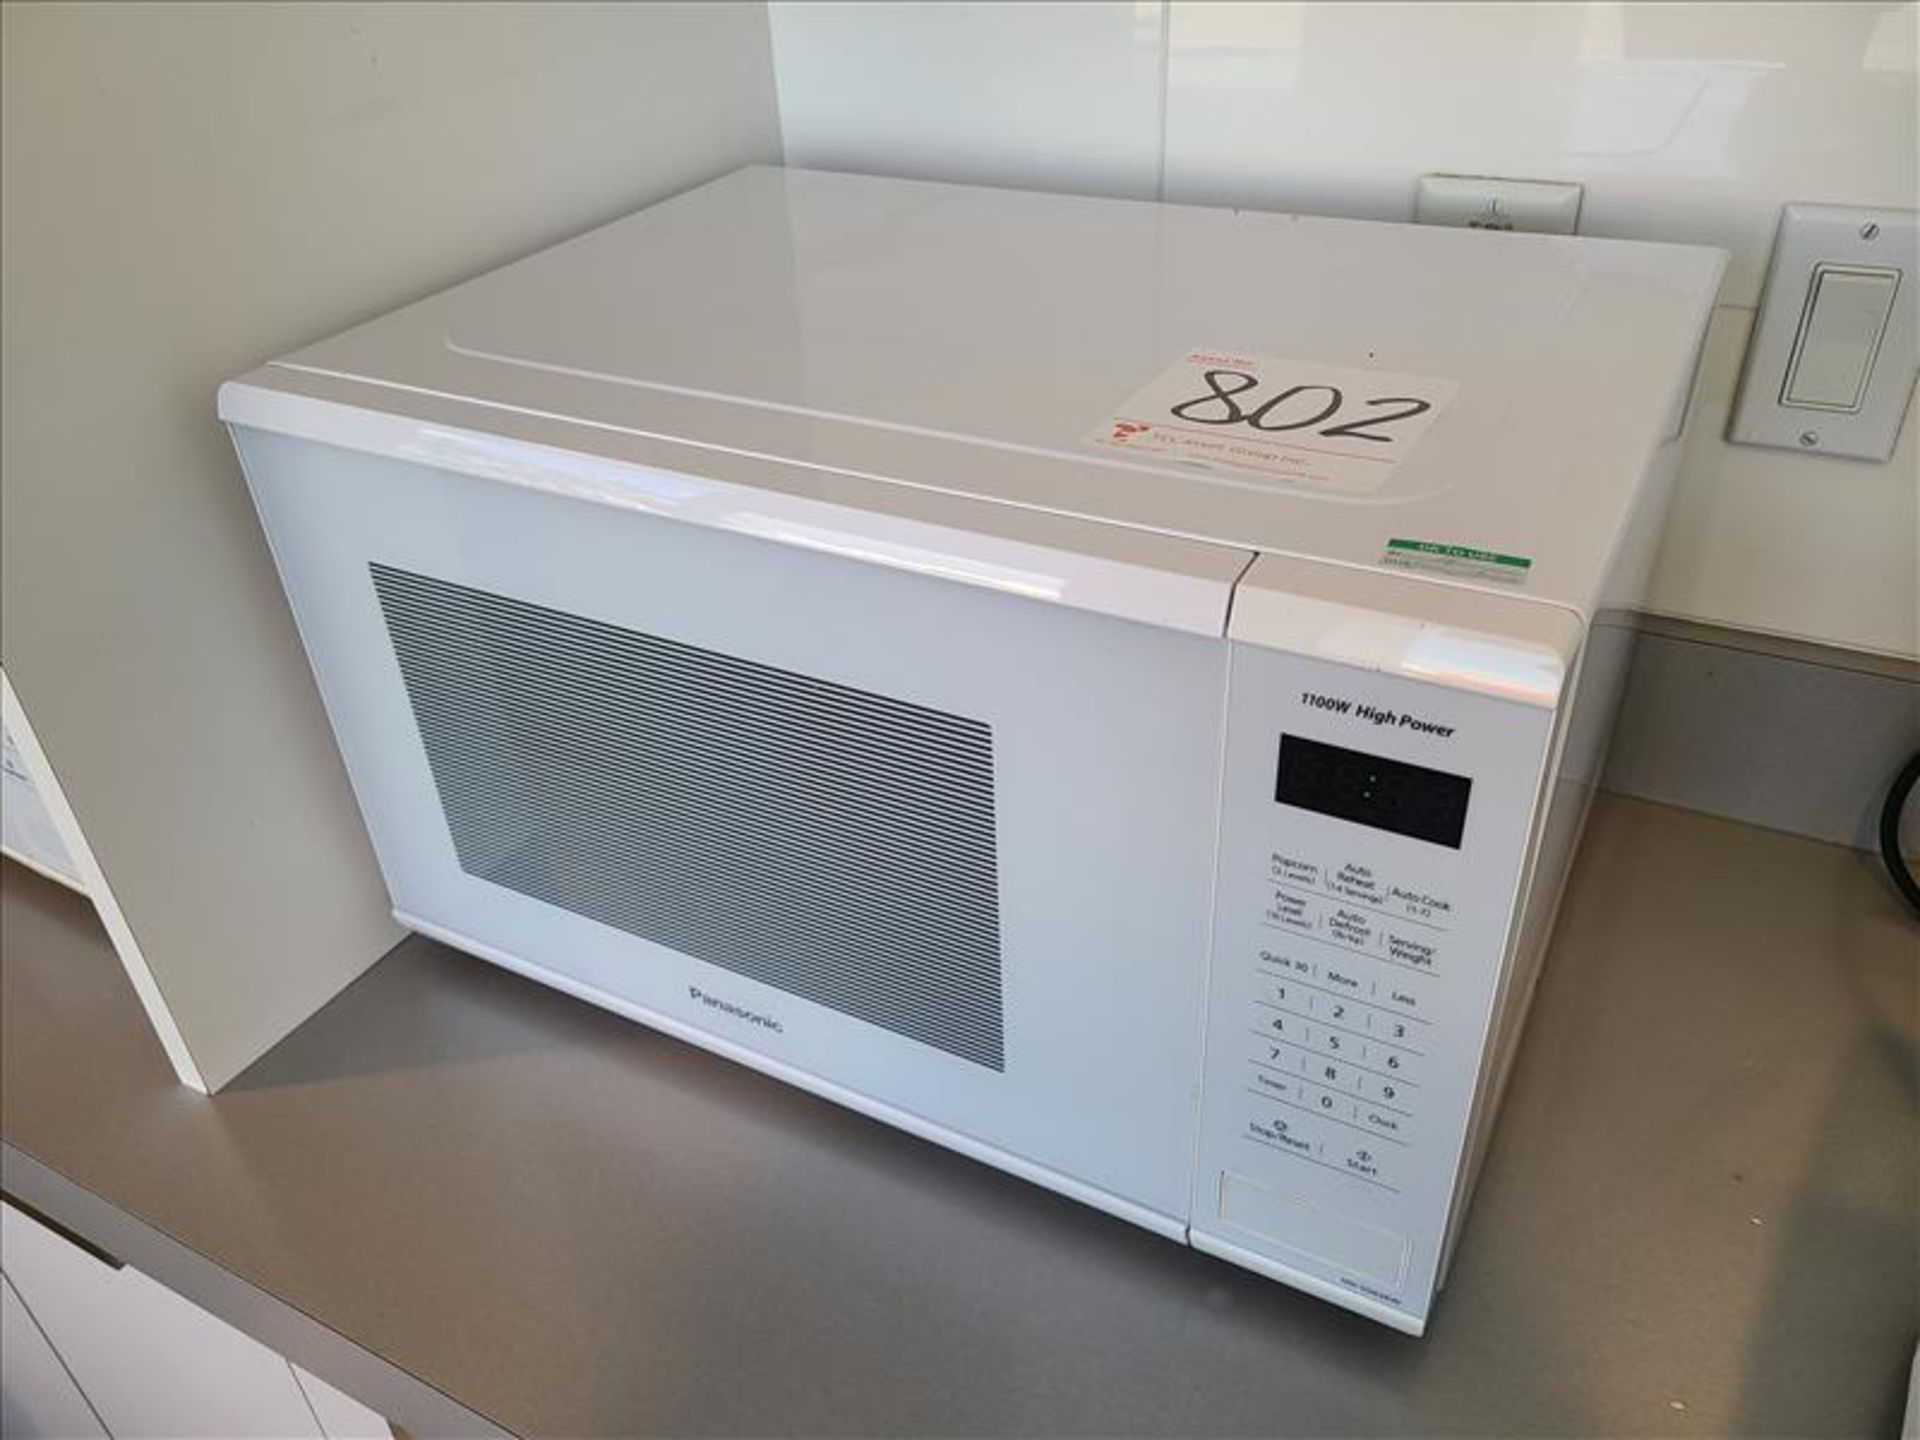 Panasonic 1100W High Power Microwave (Qty 1) (Floor 4)